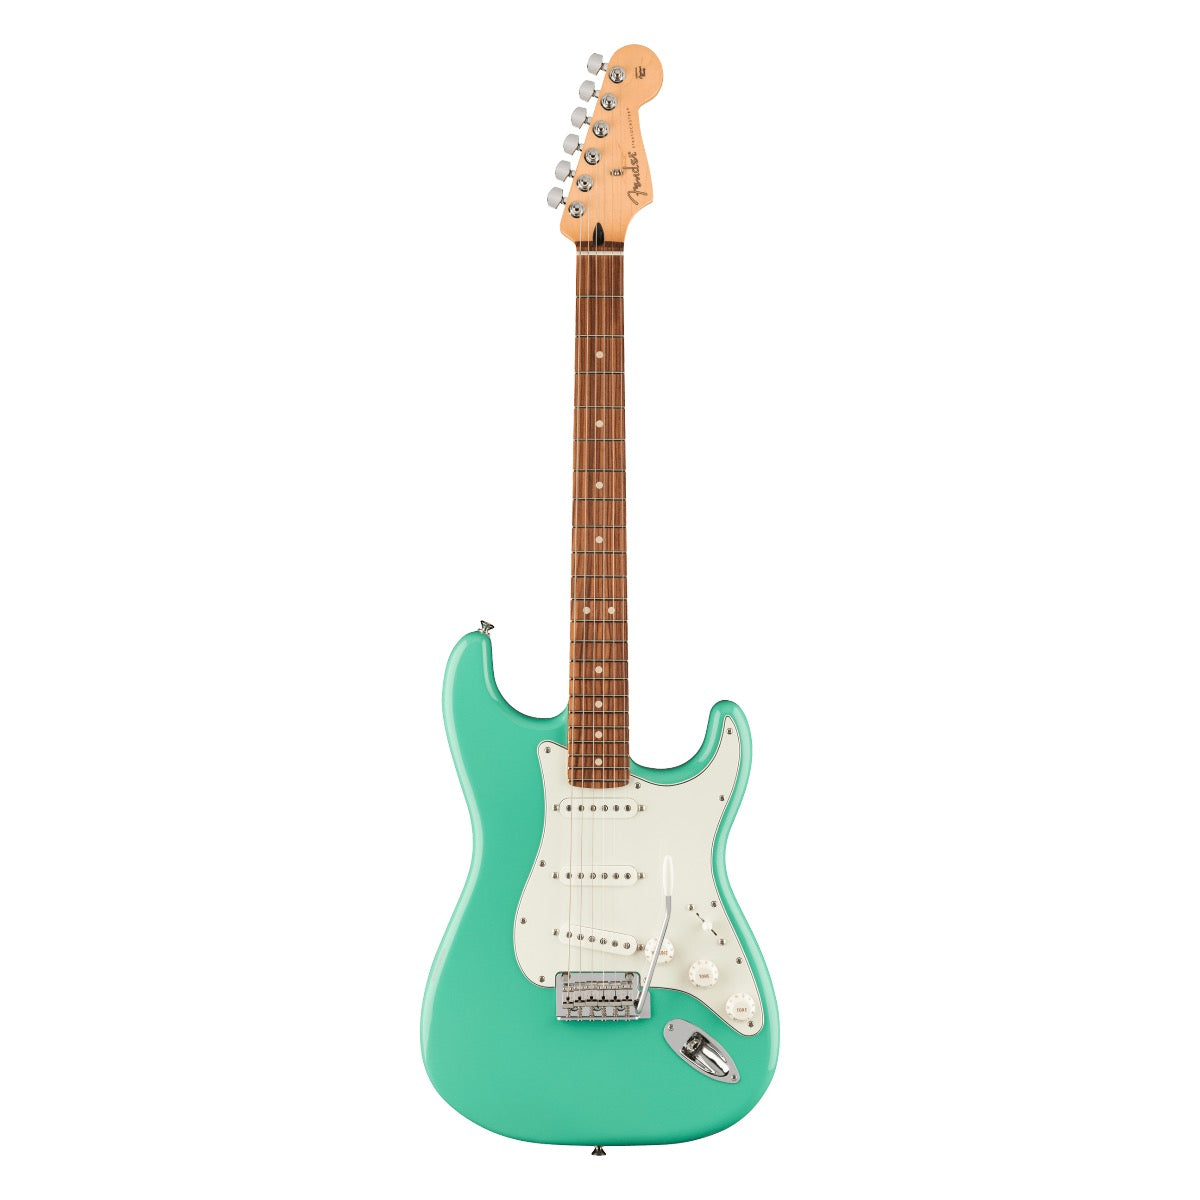 Fender Player Stratocaster - Sea Foam Green, View 2